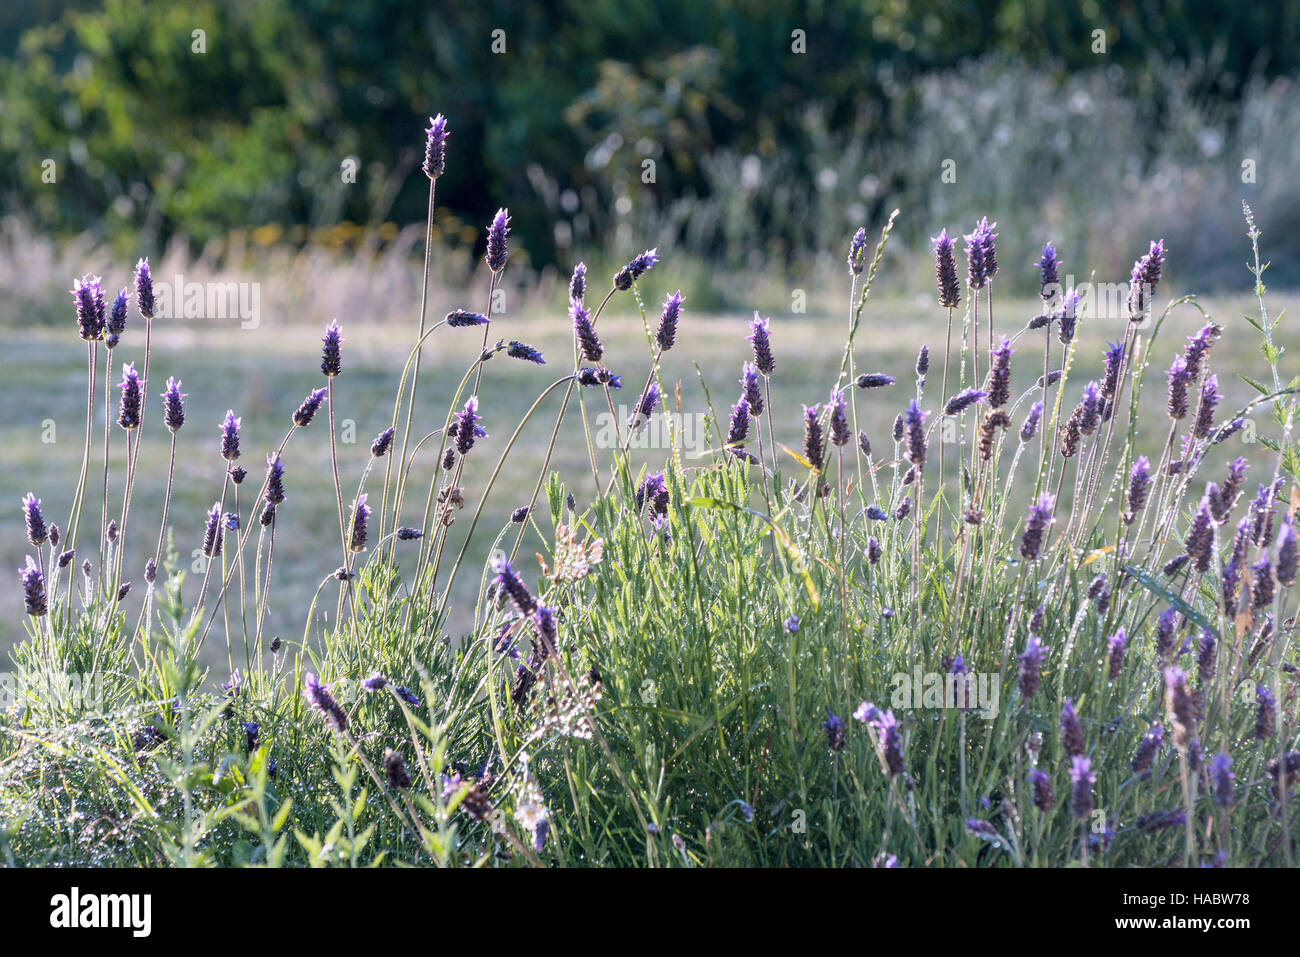 Spanish lavender flower in bloom in the rain Stock Photo